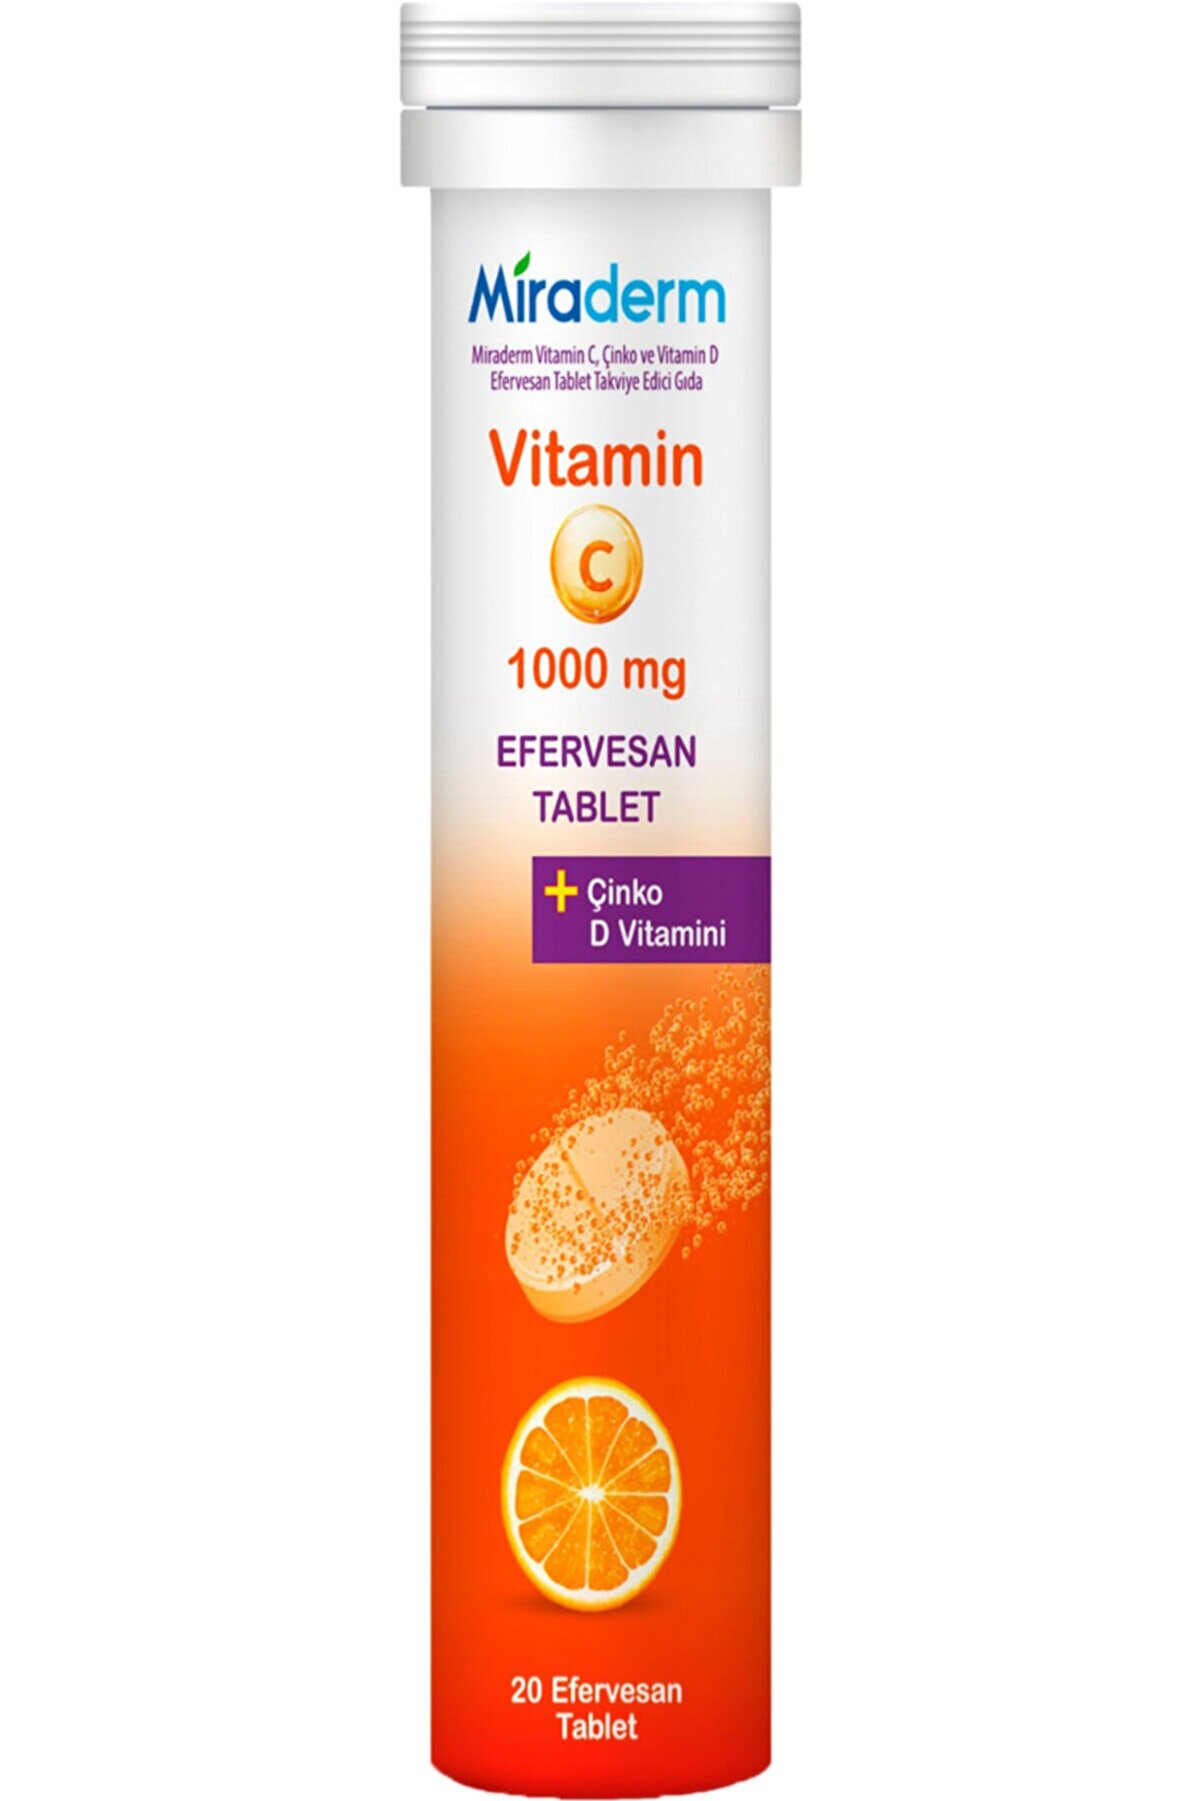 Miraderm C Vitamini 3 Lü Etki 1000 Mg 20 Efervesan